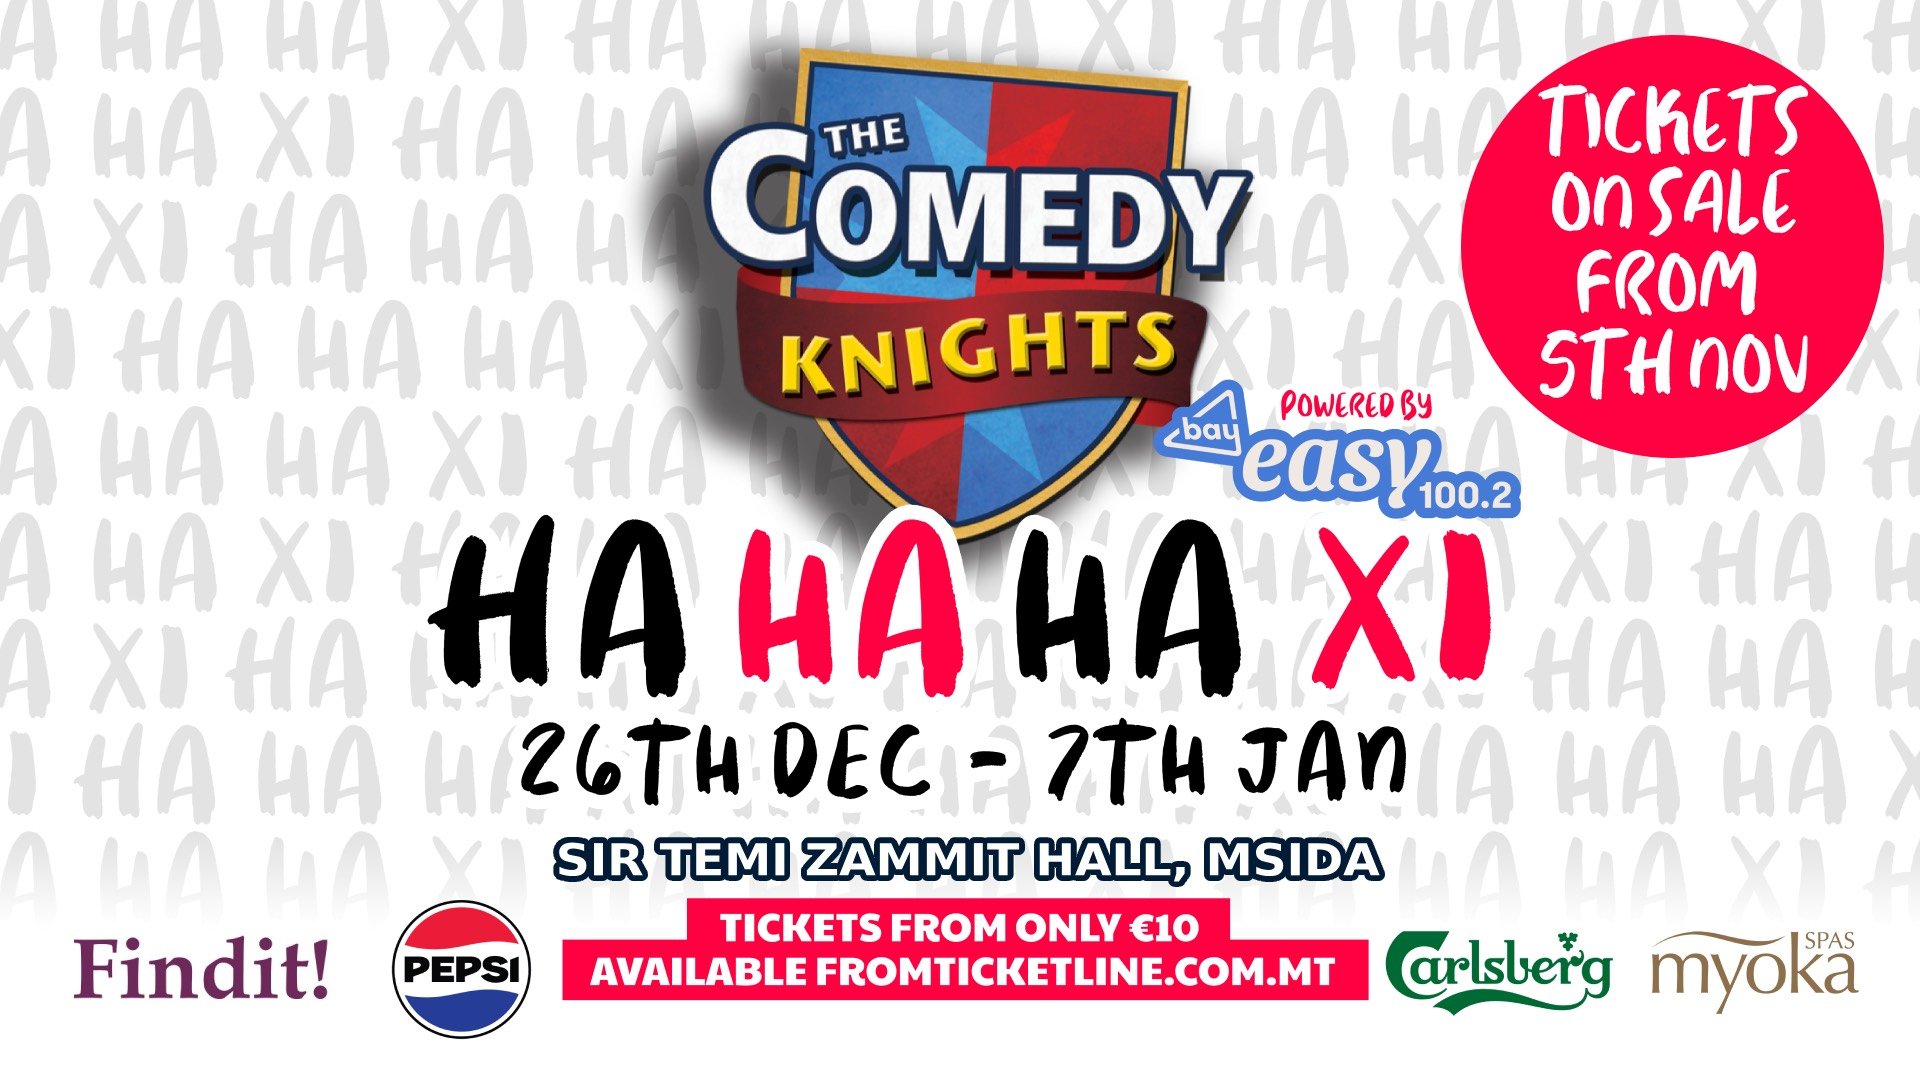 Comedy Knights: HA HA HA XI! malta, Comedy knights malta